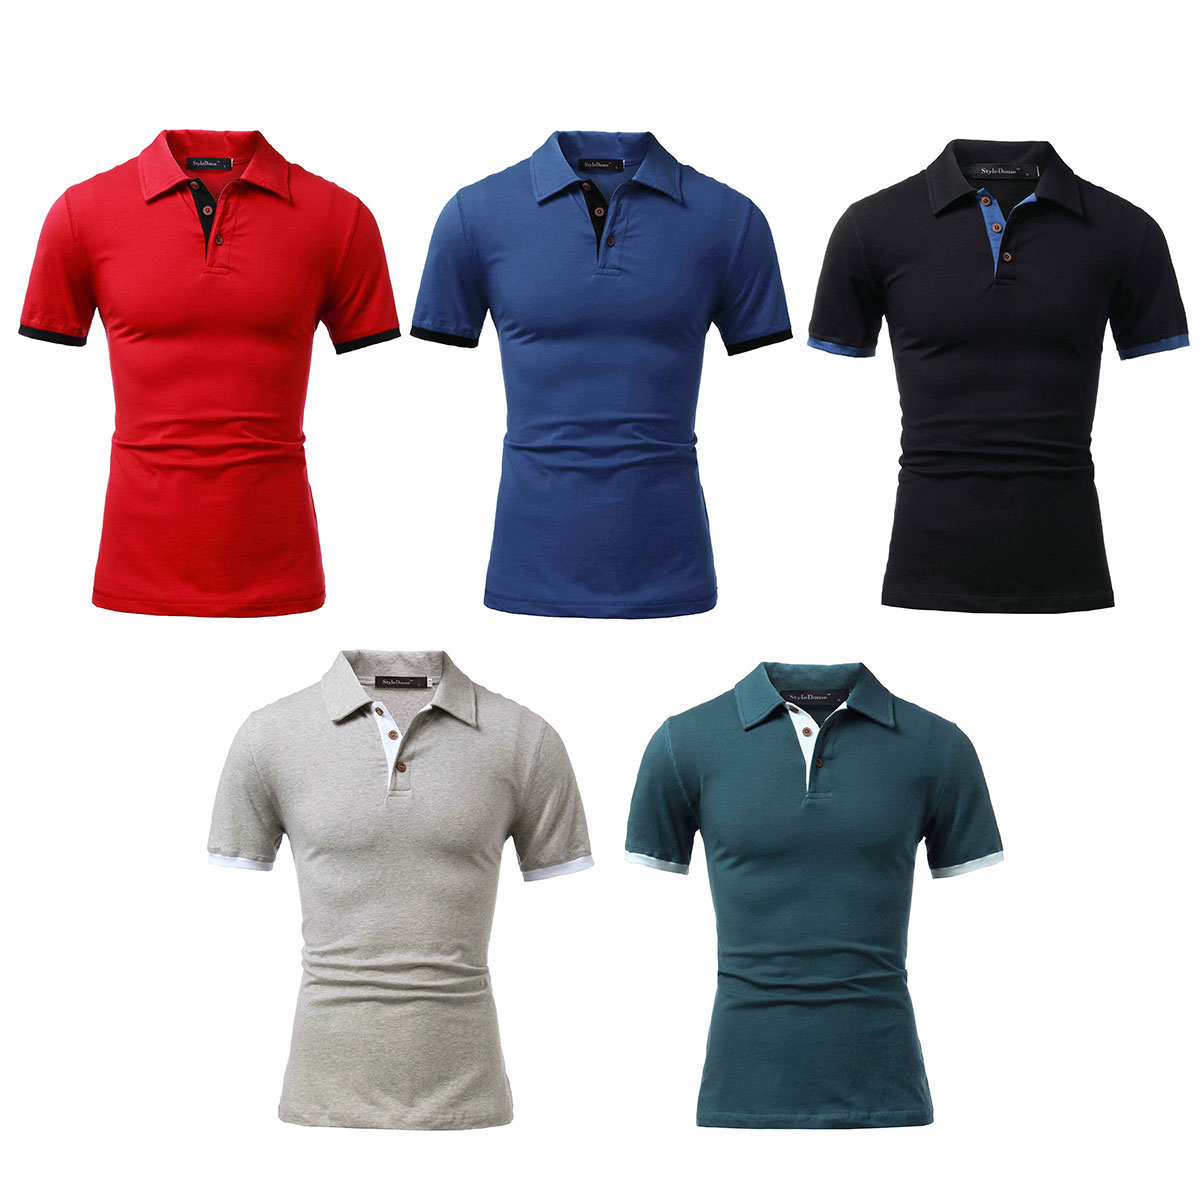 Mens-Casual-Walking-Shirt-Short-Sleeve-T-Shirts-Cotton-T-Shirt-Button-Casual-Slim-Top-1456406